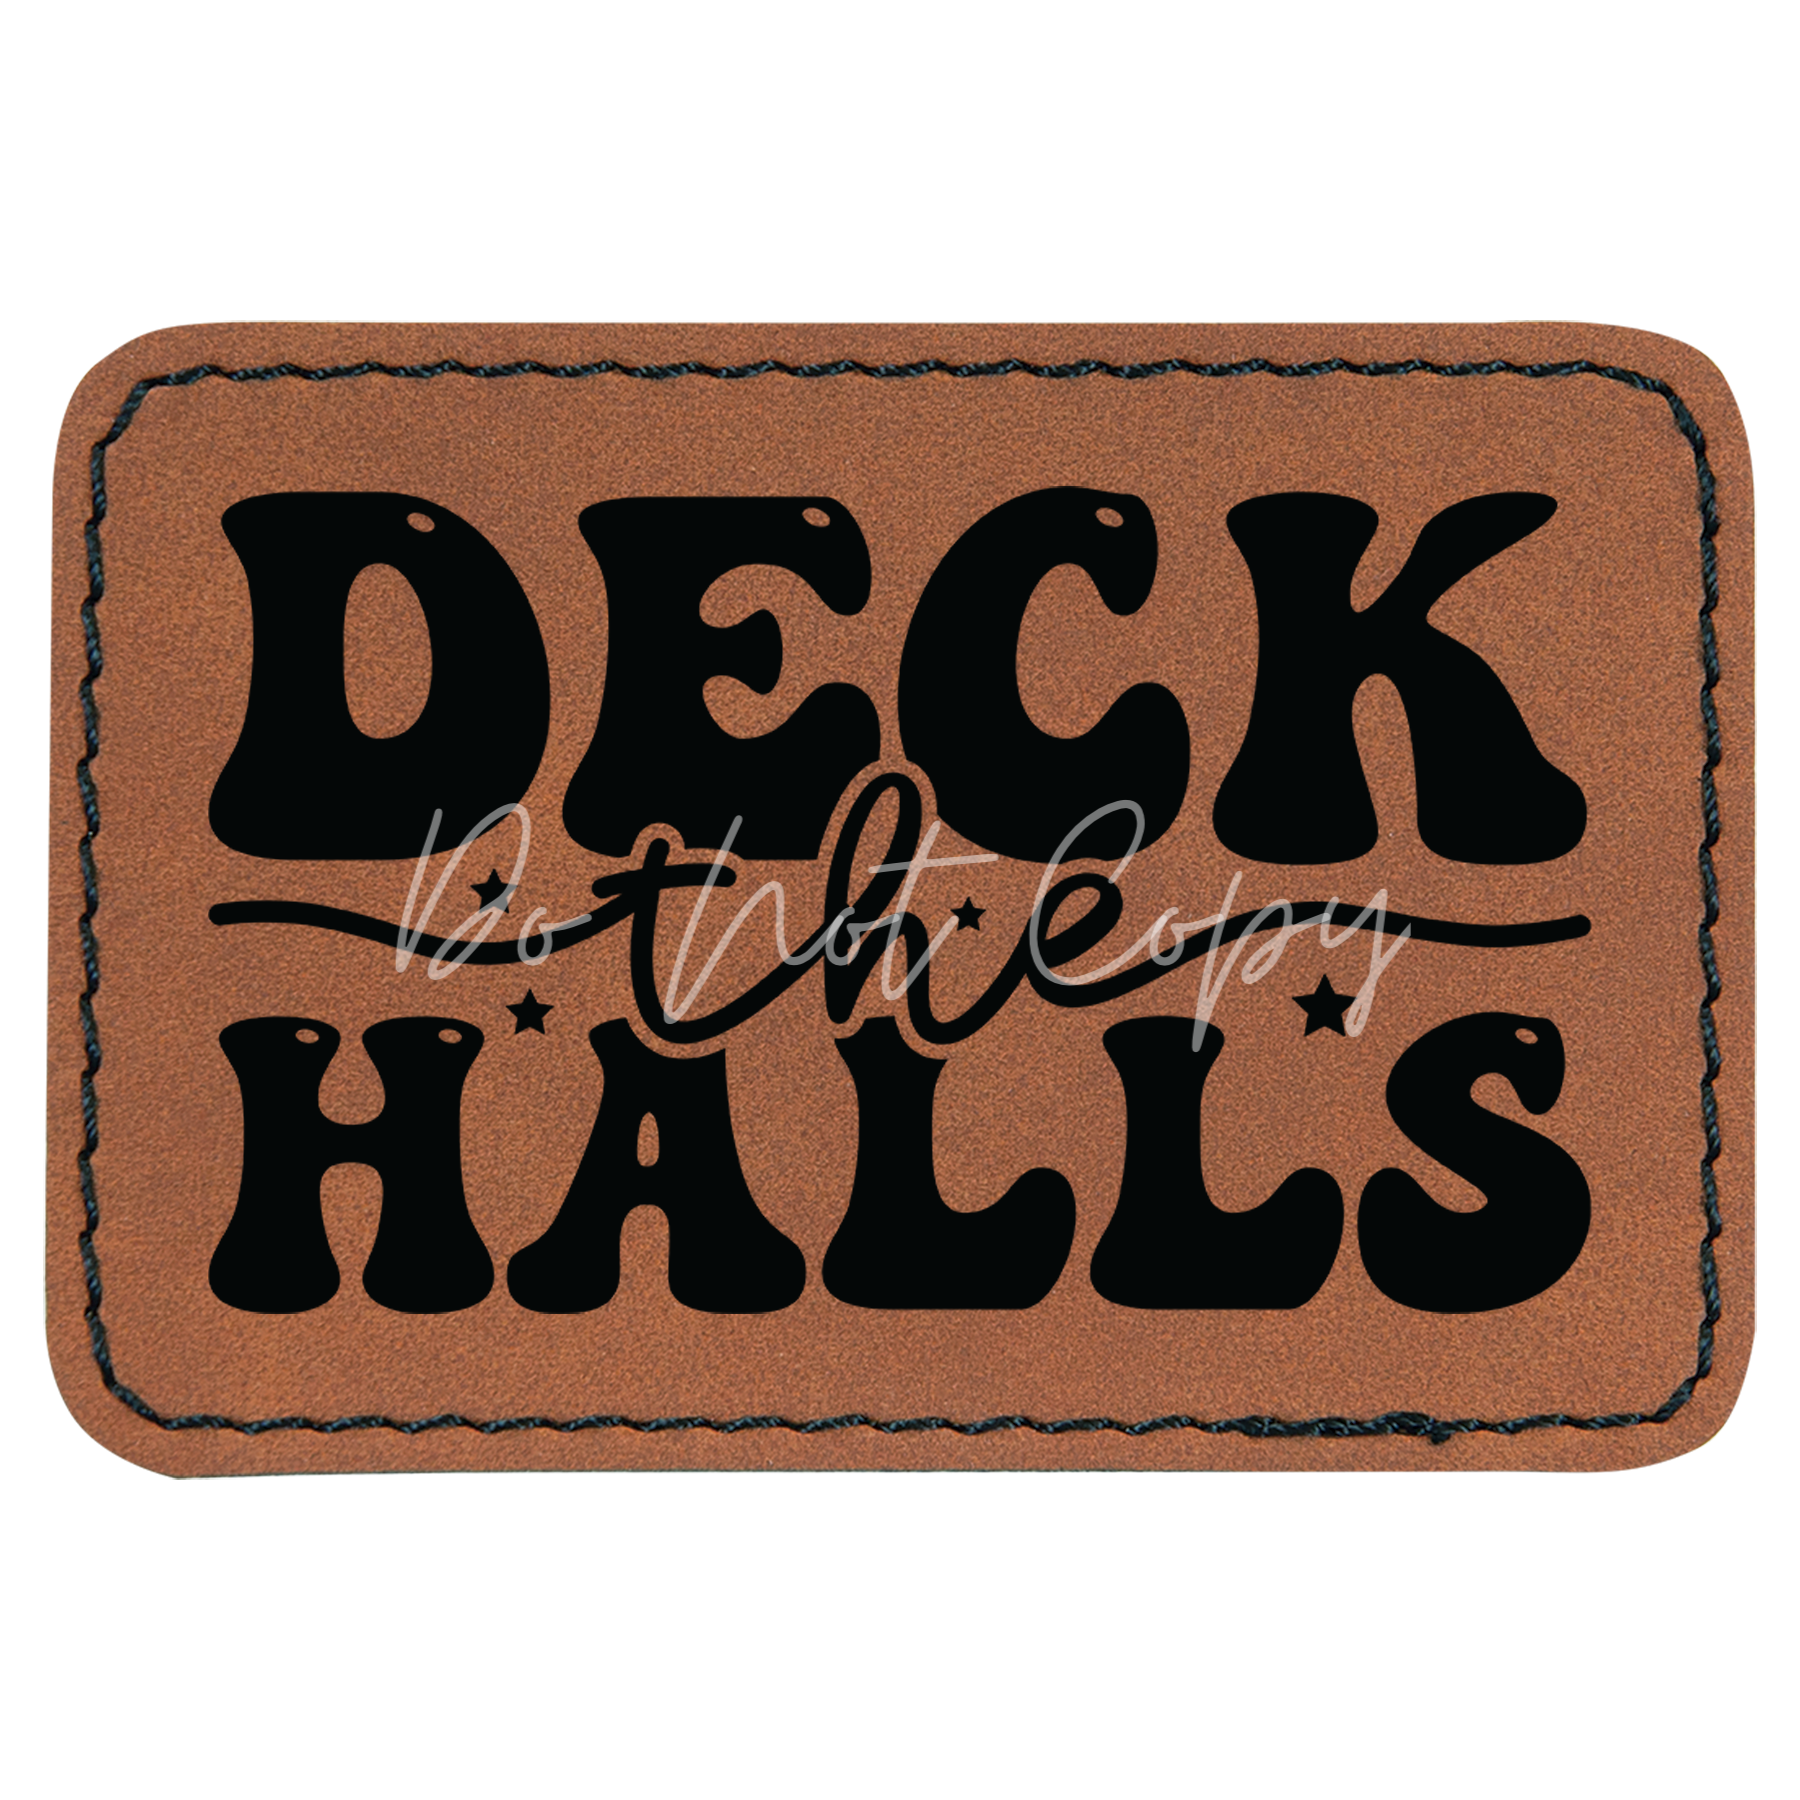 Deck The Halls Patch